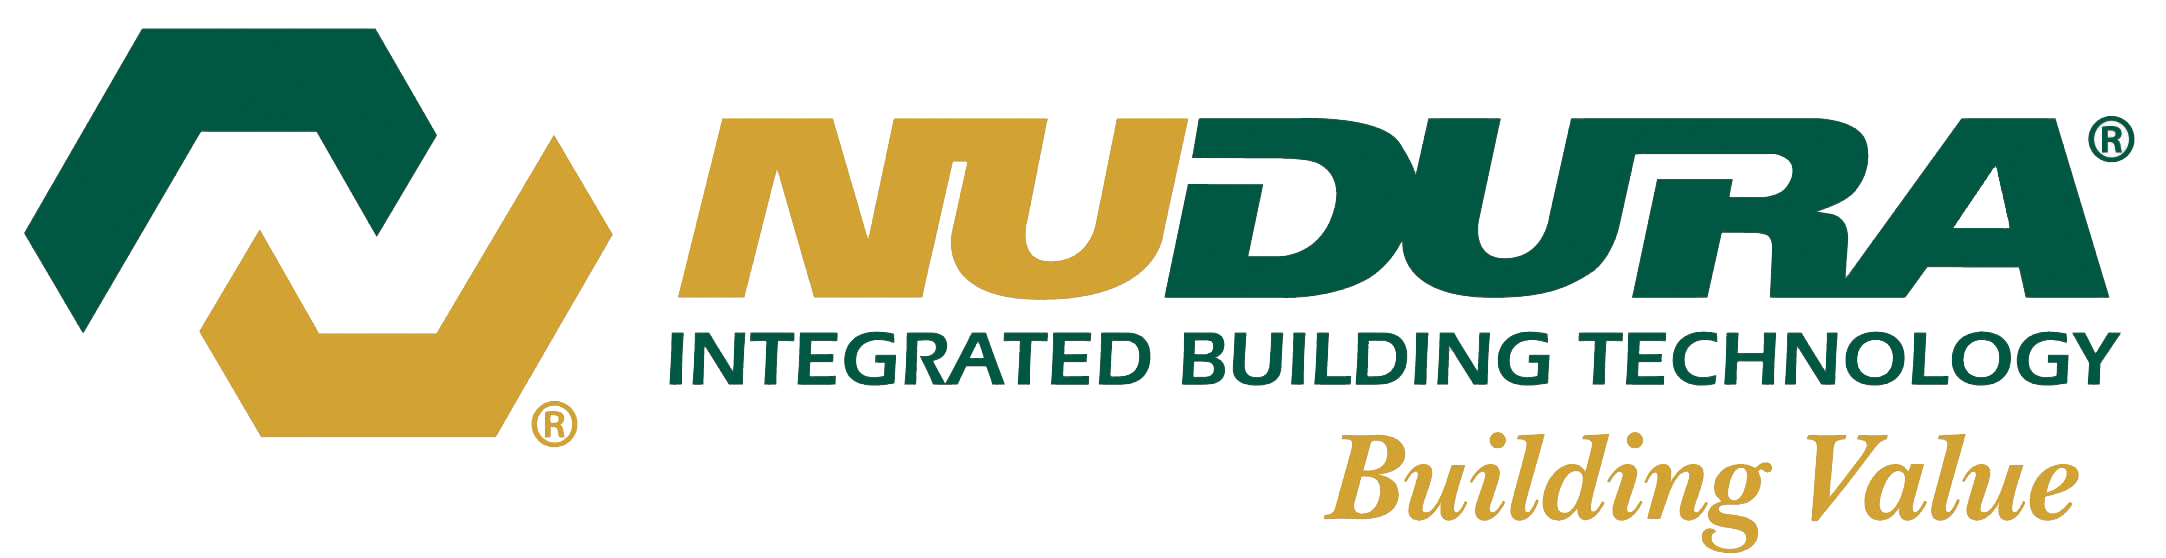 Nudura-logo_Single-ForWeb